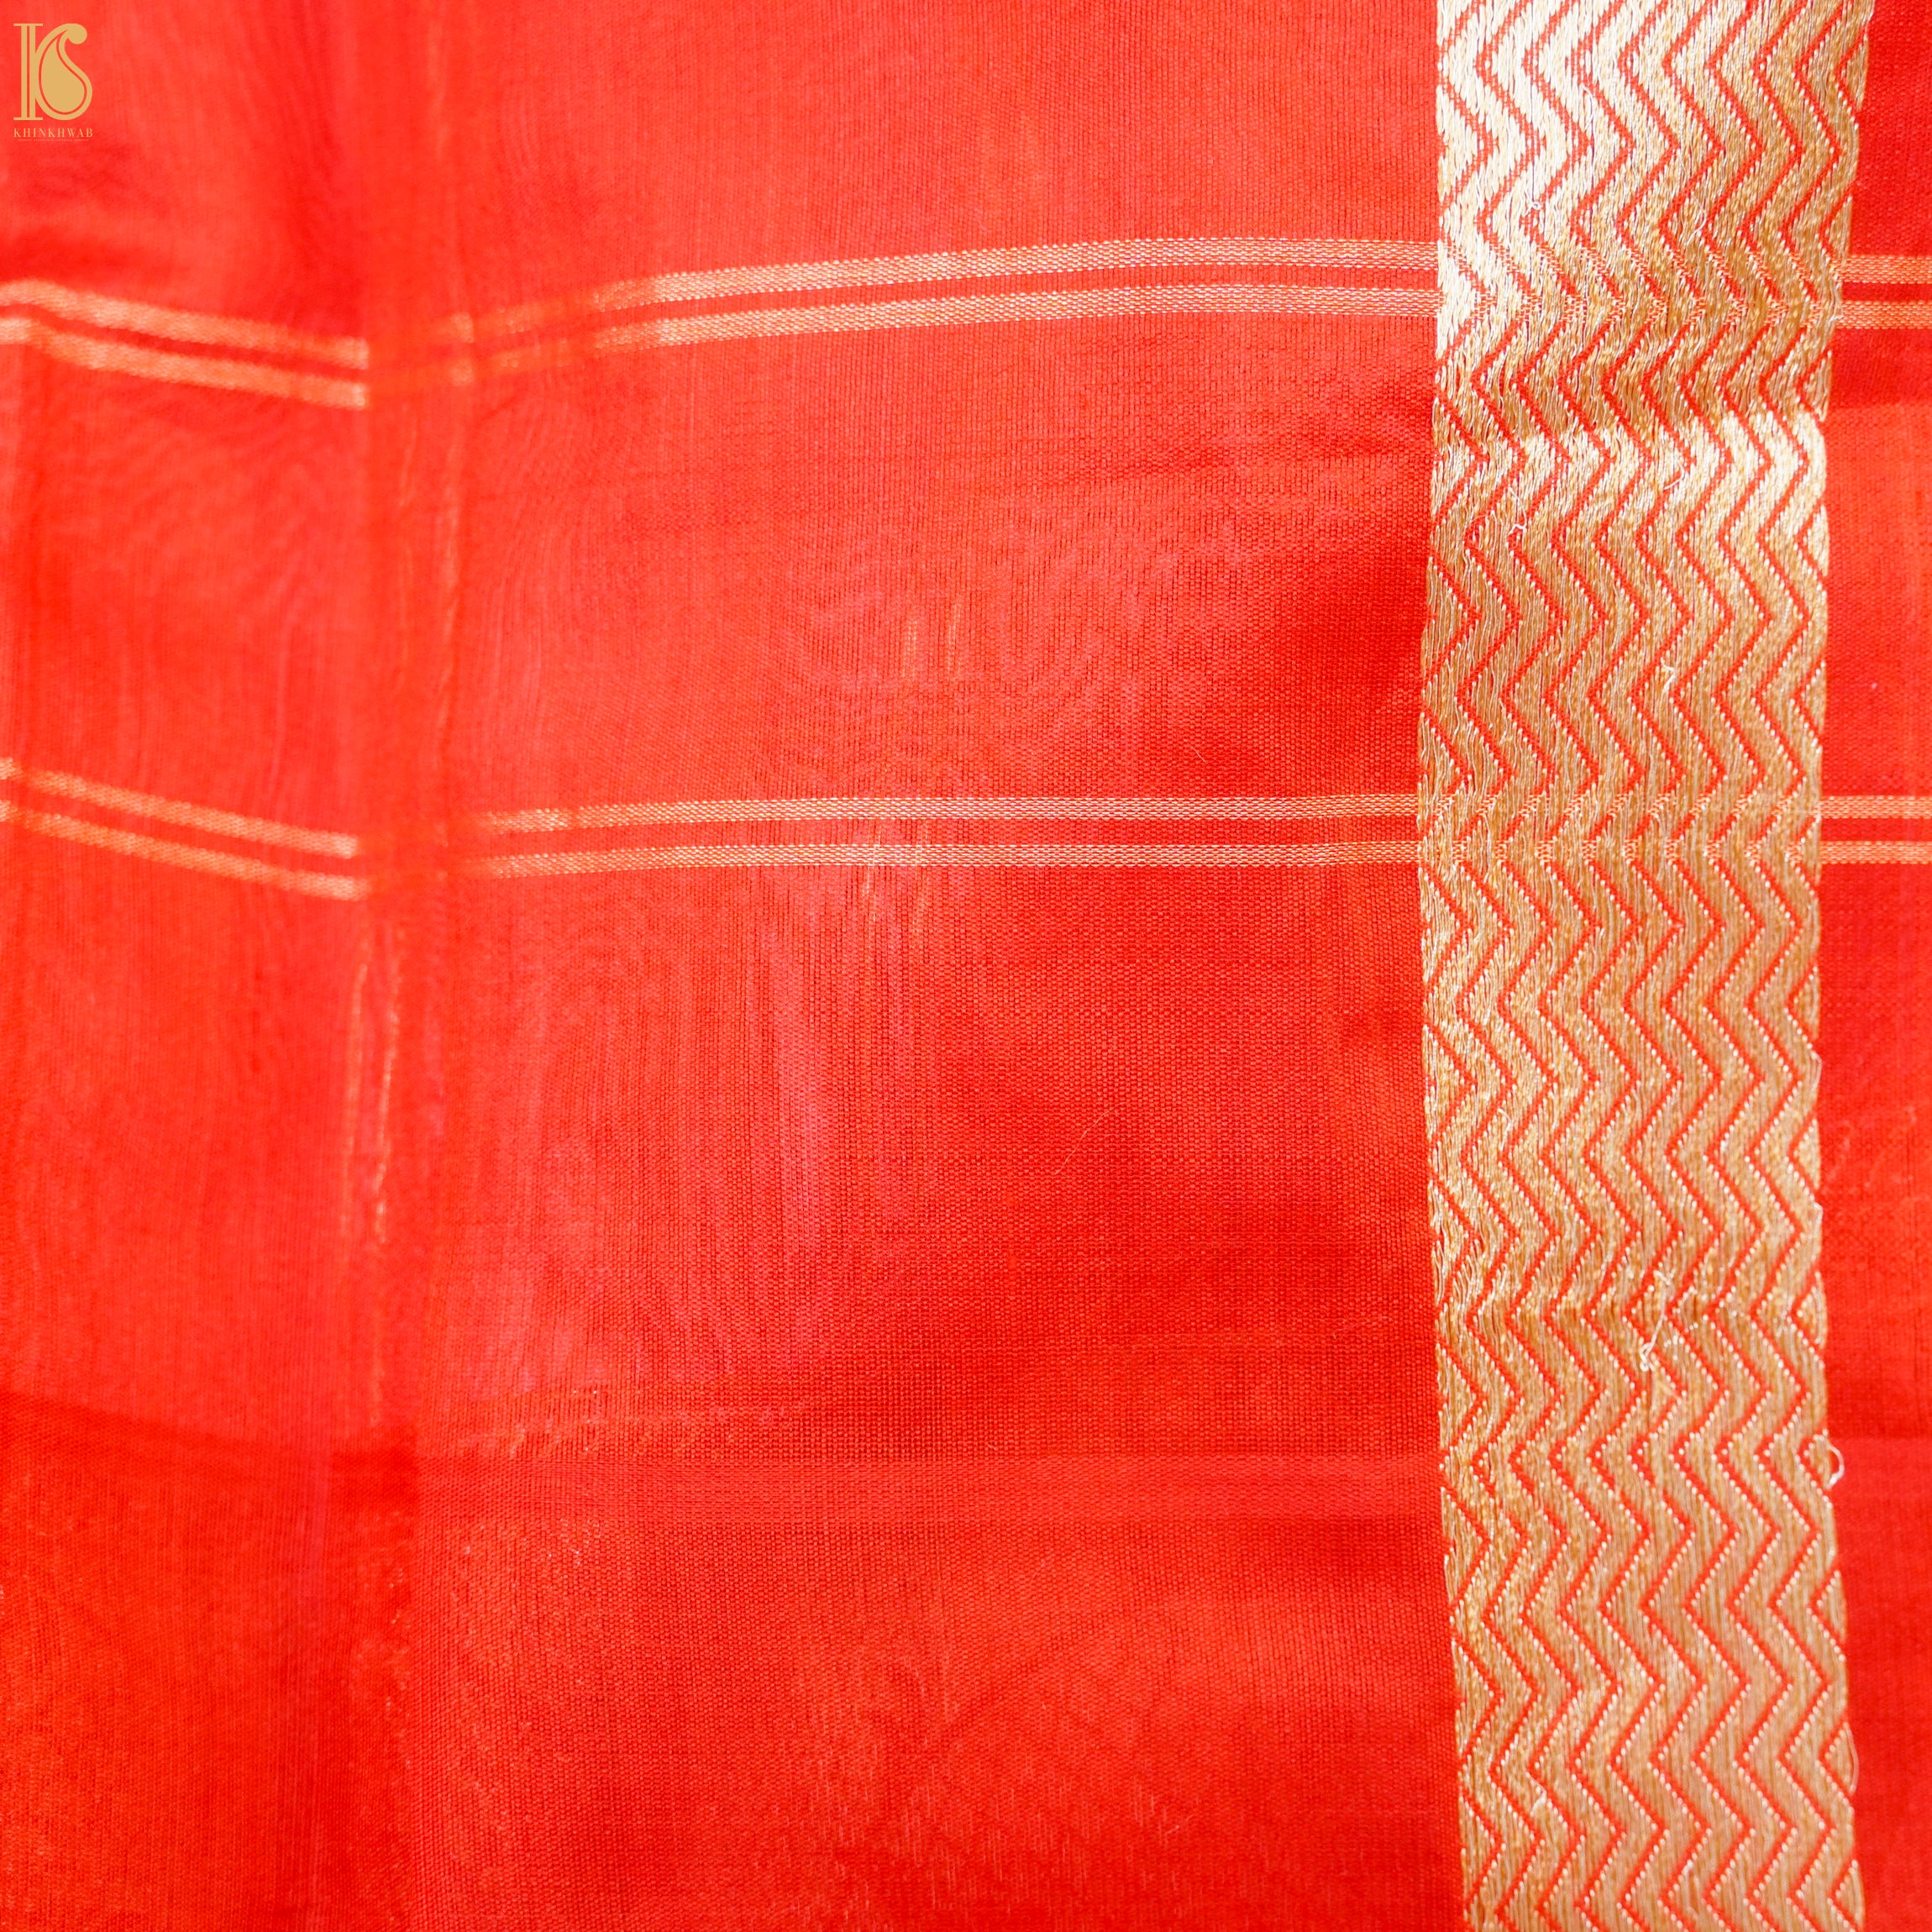 Pink &amp; Red Pure Linen Handloom Banarasi Saree with Meenakari Border - Khinkhwab